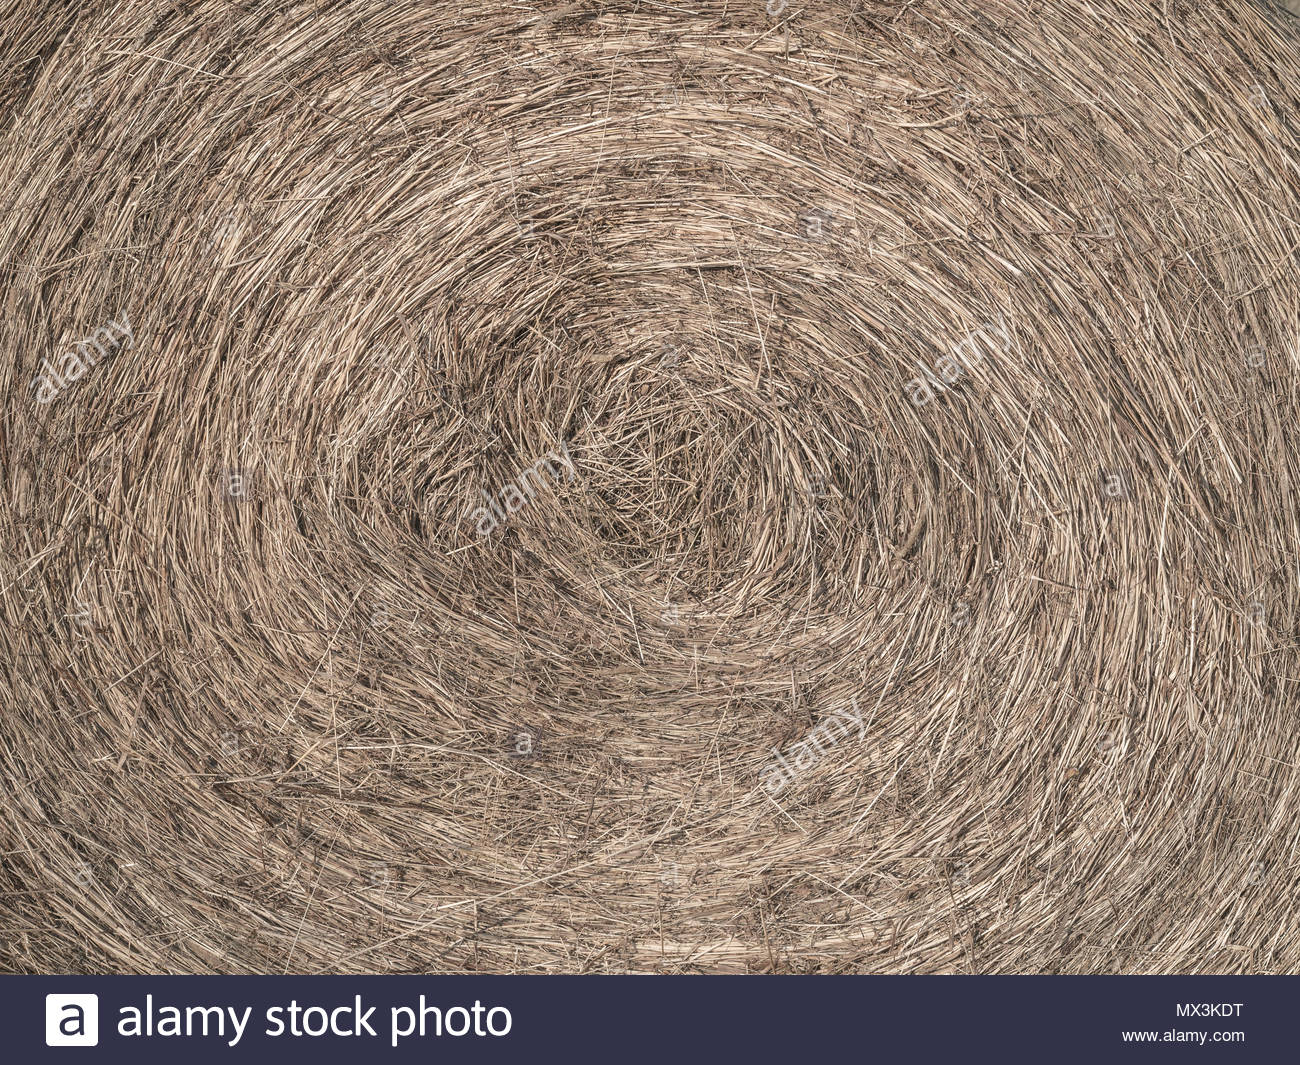 Round Bale Background Stock Photo